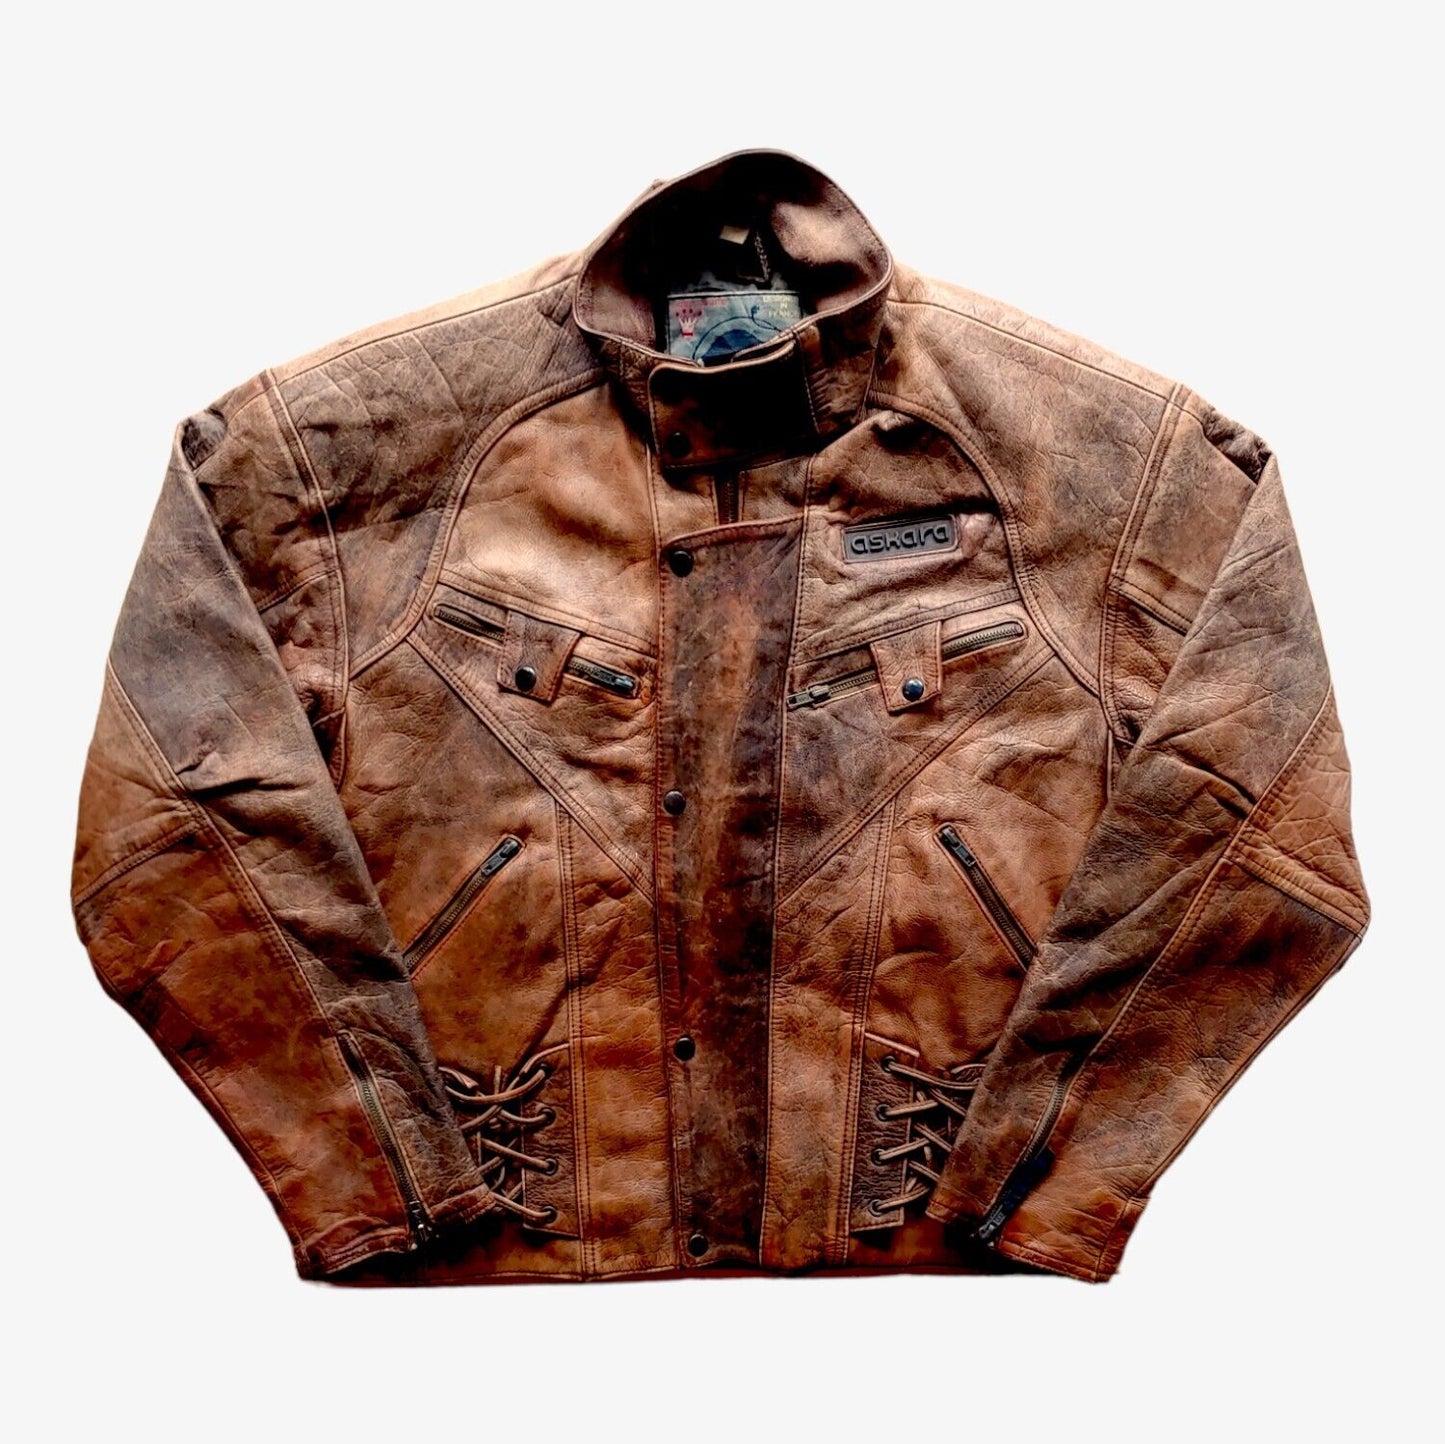 Vintage 1990s Askara Paris Leather Biker Jacket With Big Back Embroidered Bull Front - Casspios Dream